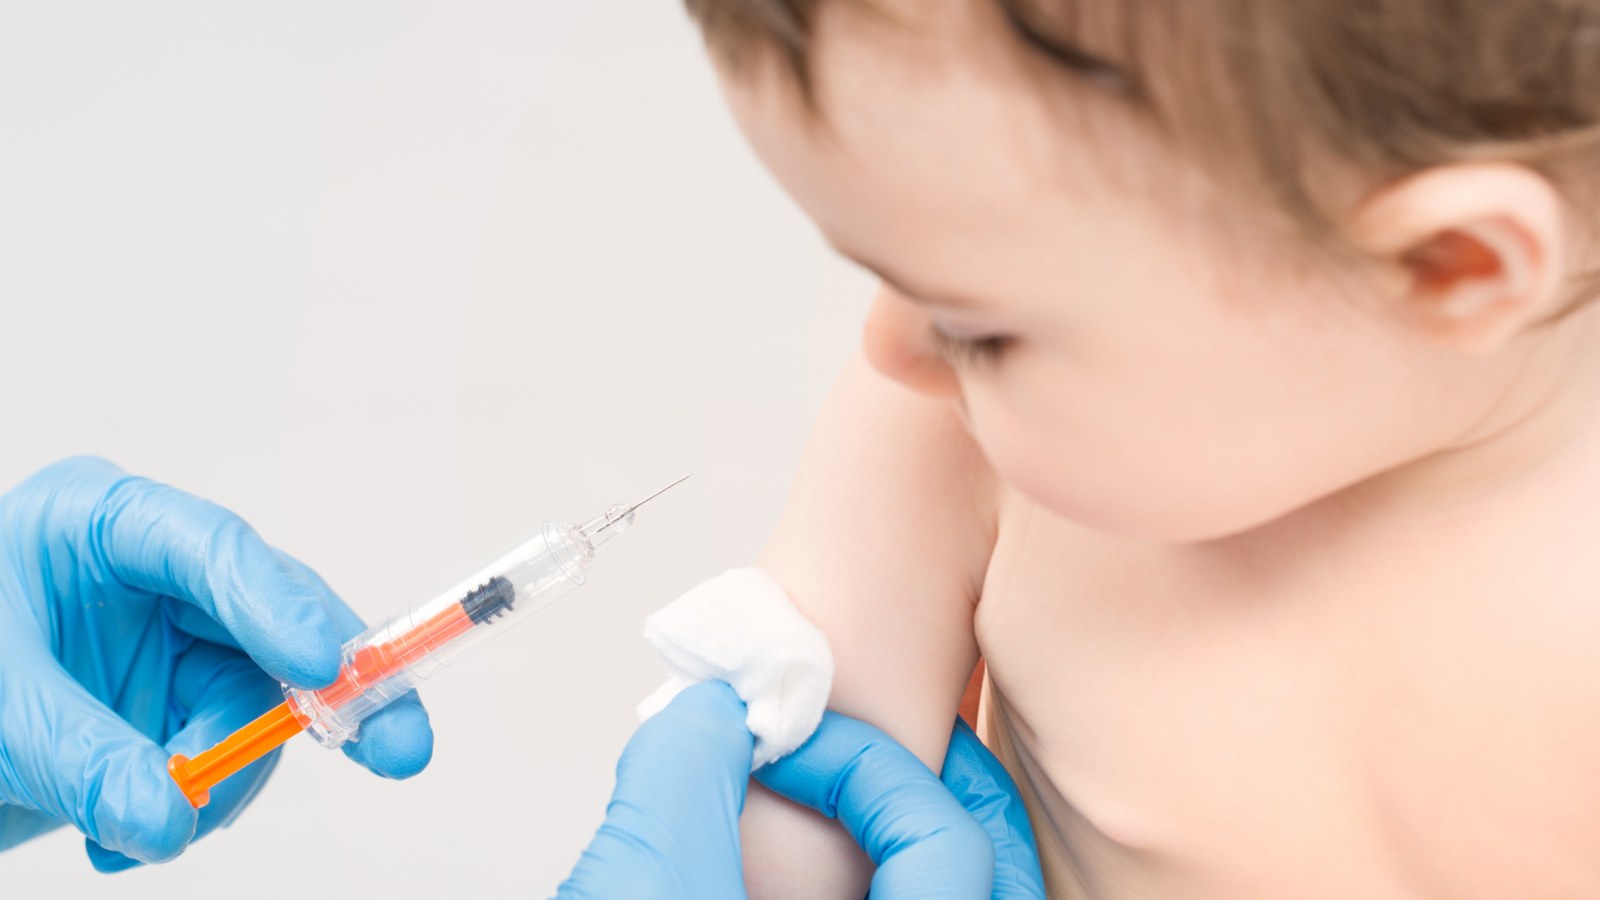 Routine Childhood Immunization During Covid-19